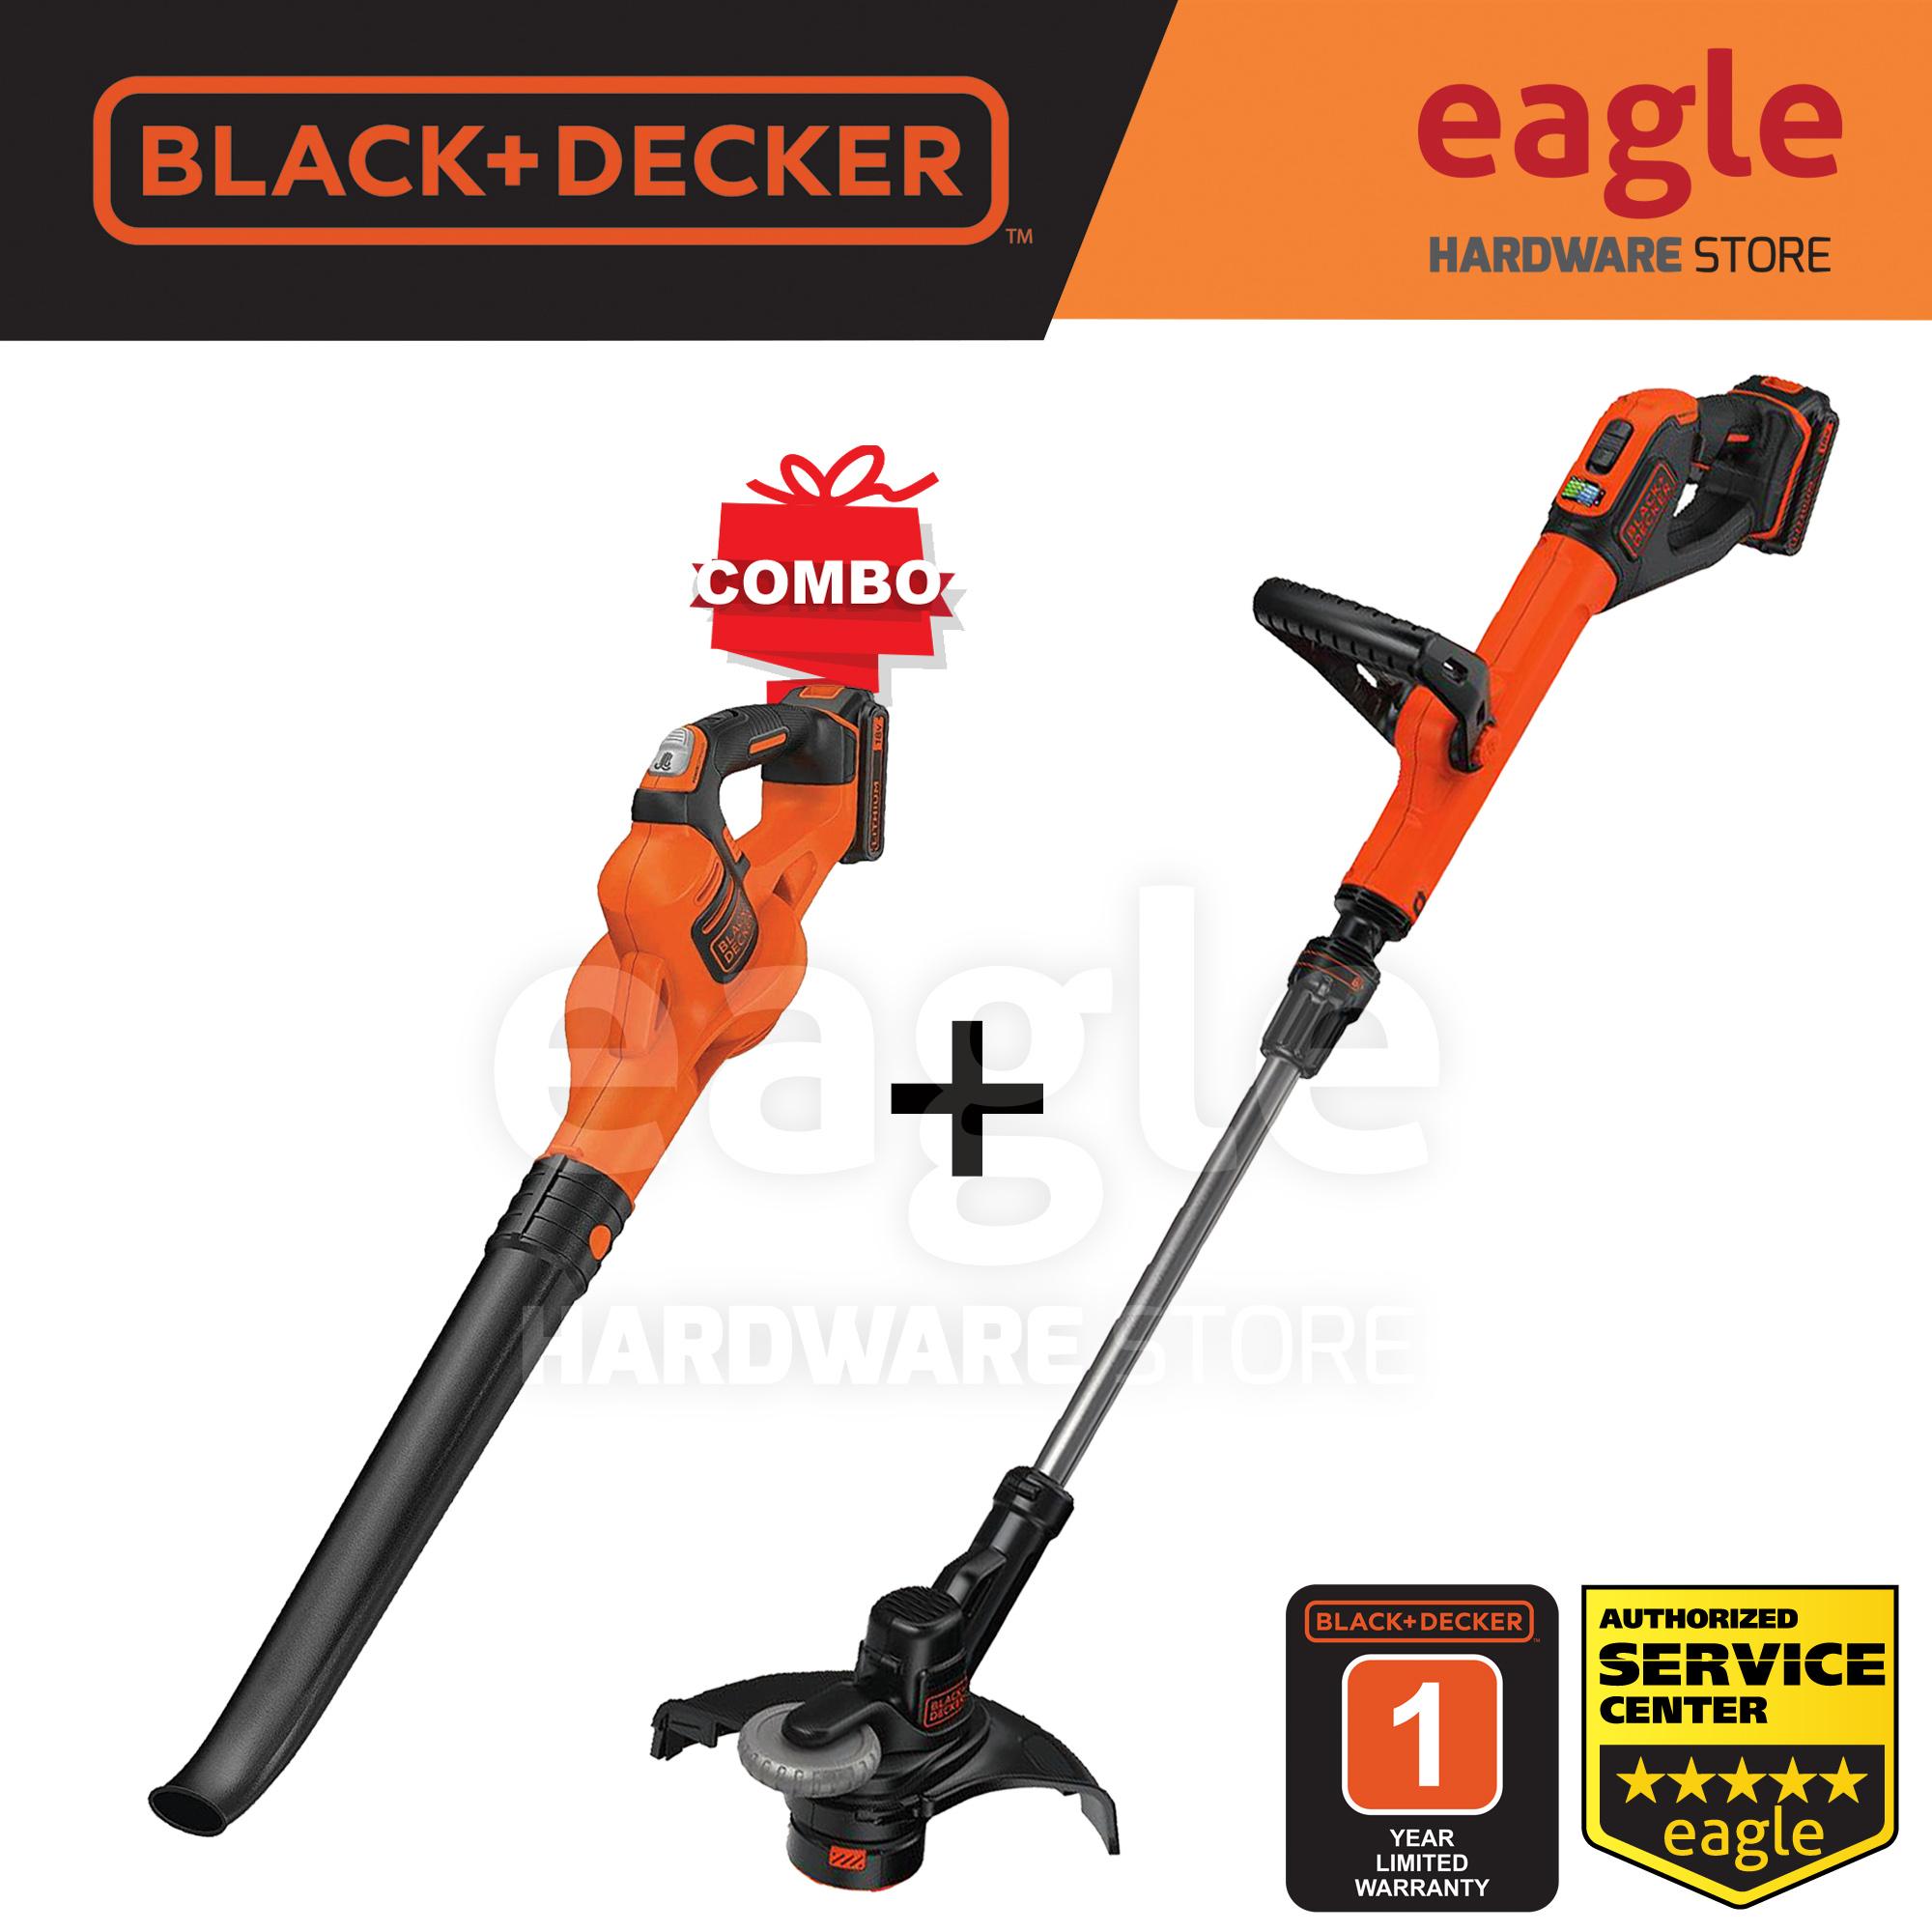 Buy Black+Decker STC1820EPCF-B1 18V 28cm Cordless Brush Cutter